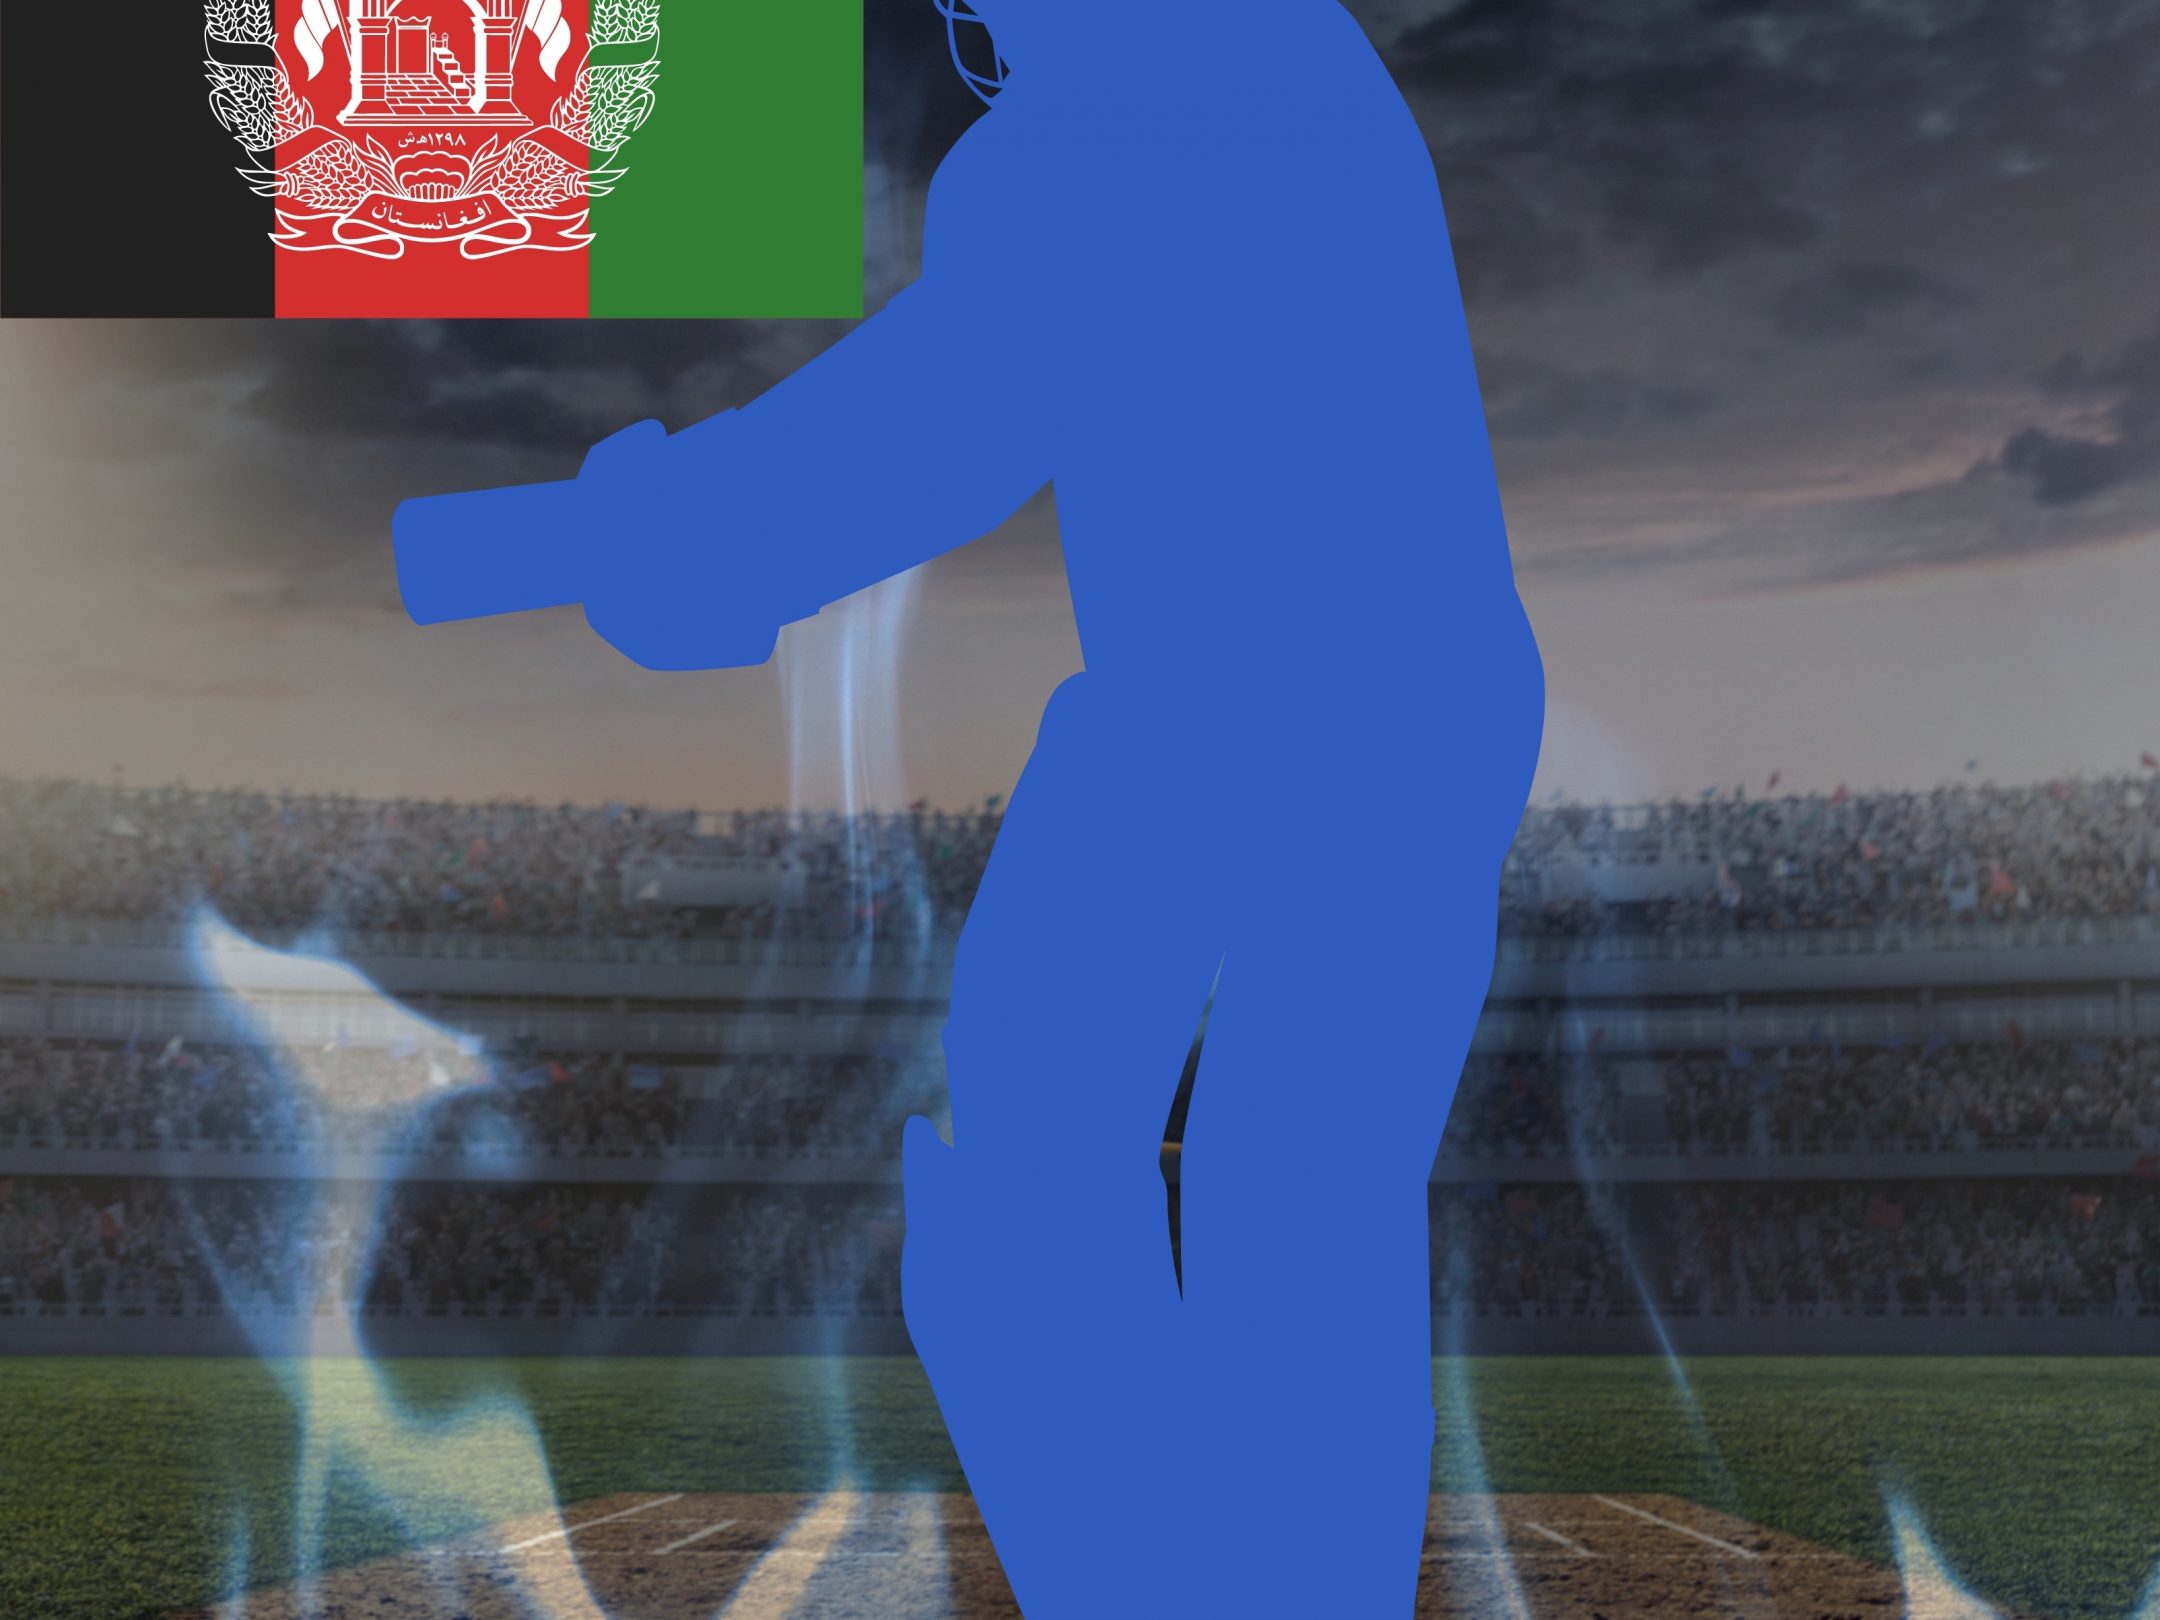 2160x1620 iPad wallpaper 4k Afhganistan Cricket Stadium iPad Wallpaper 2160x1620 pixels resolution